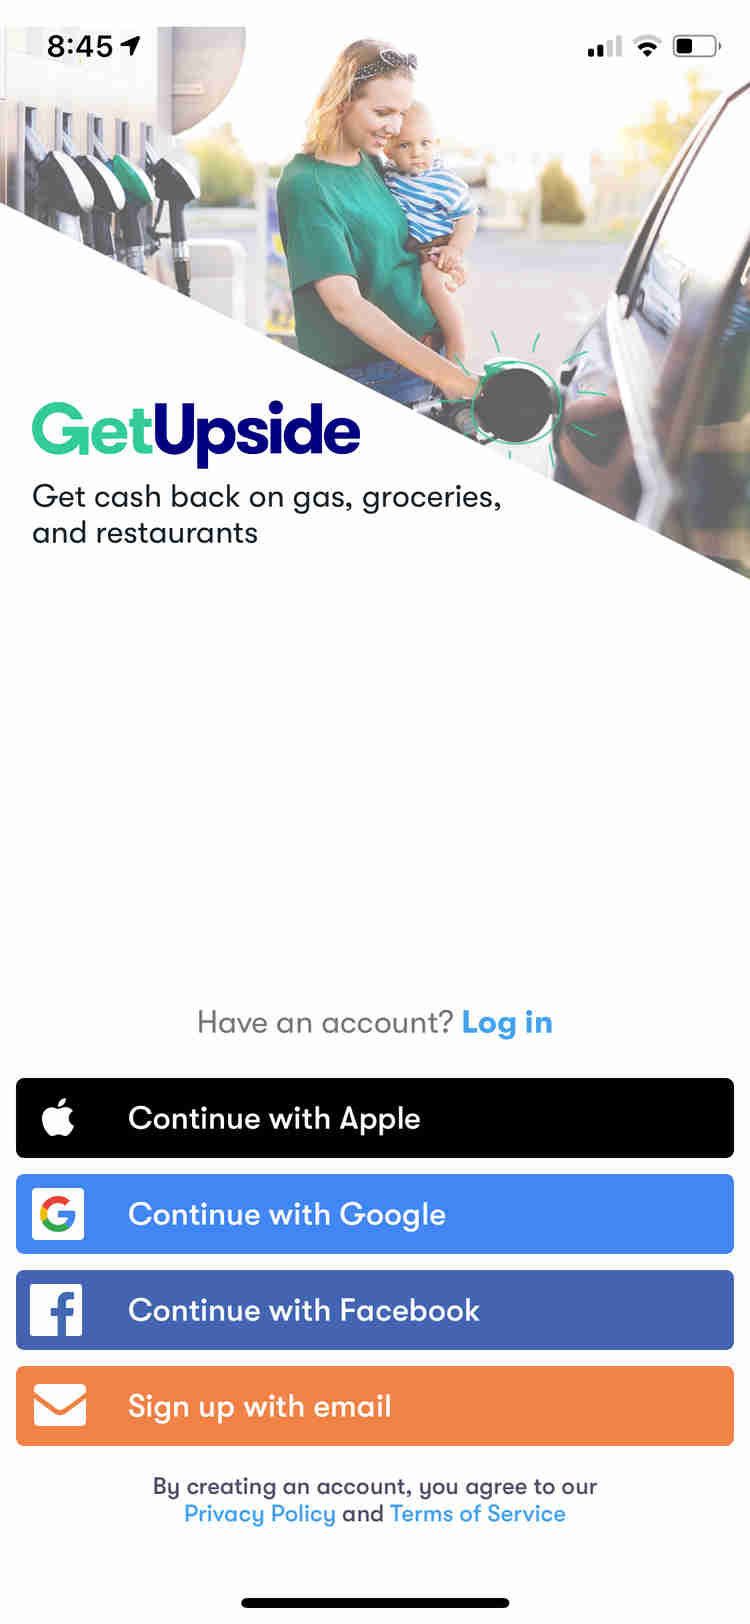 Image showing GetUpside login screen in the app.